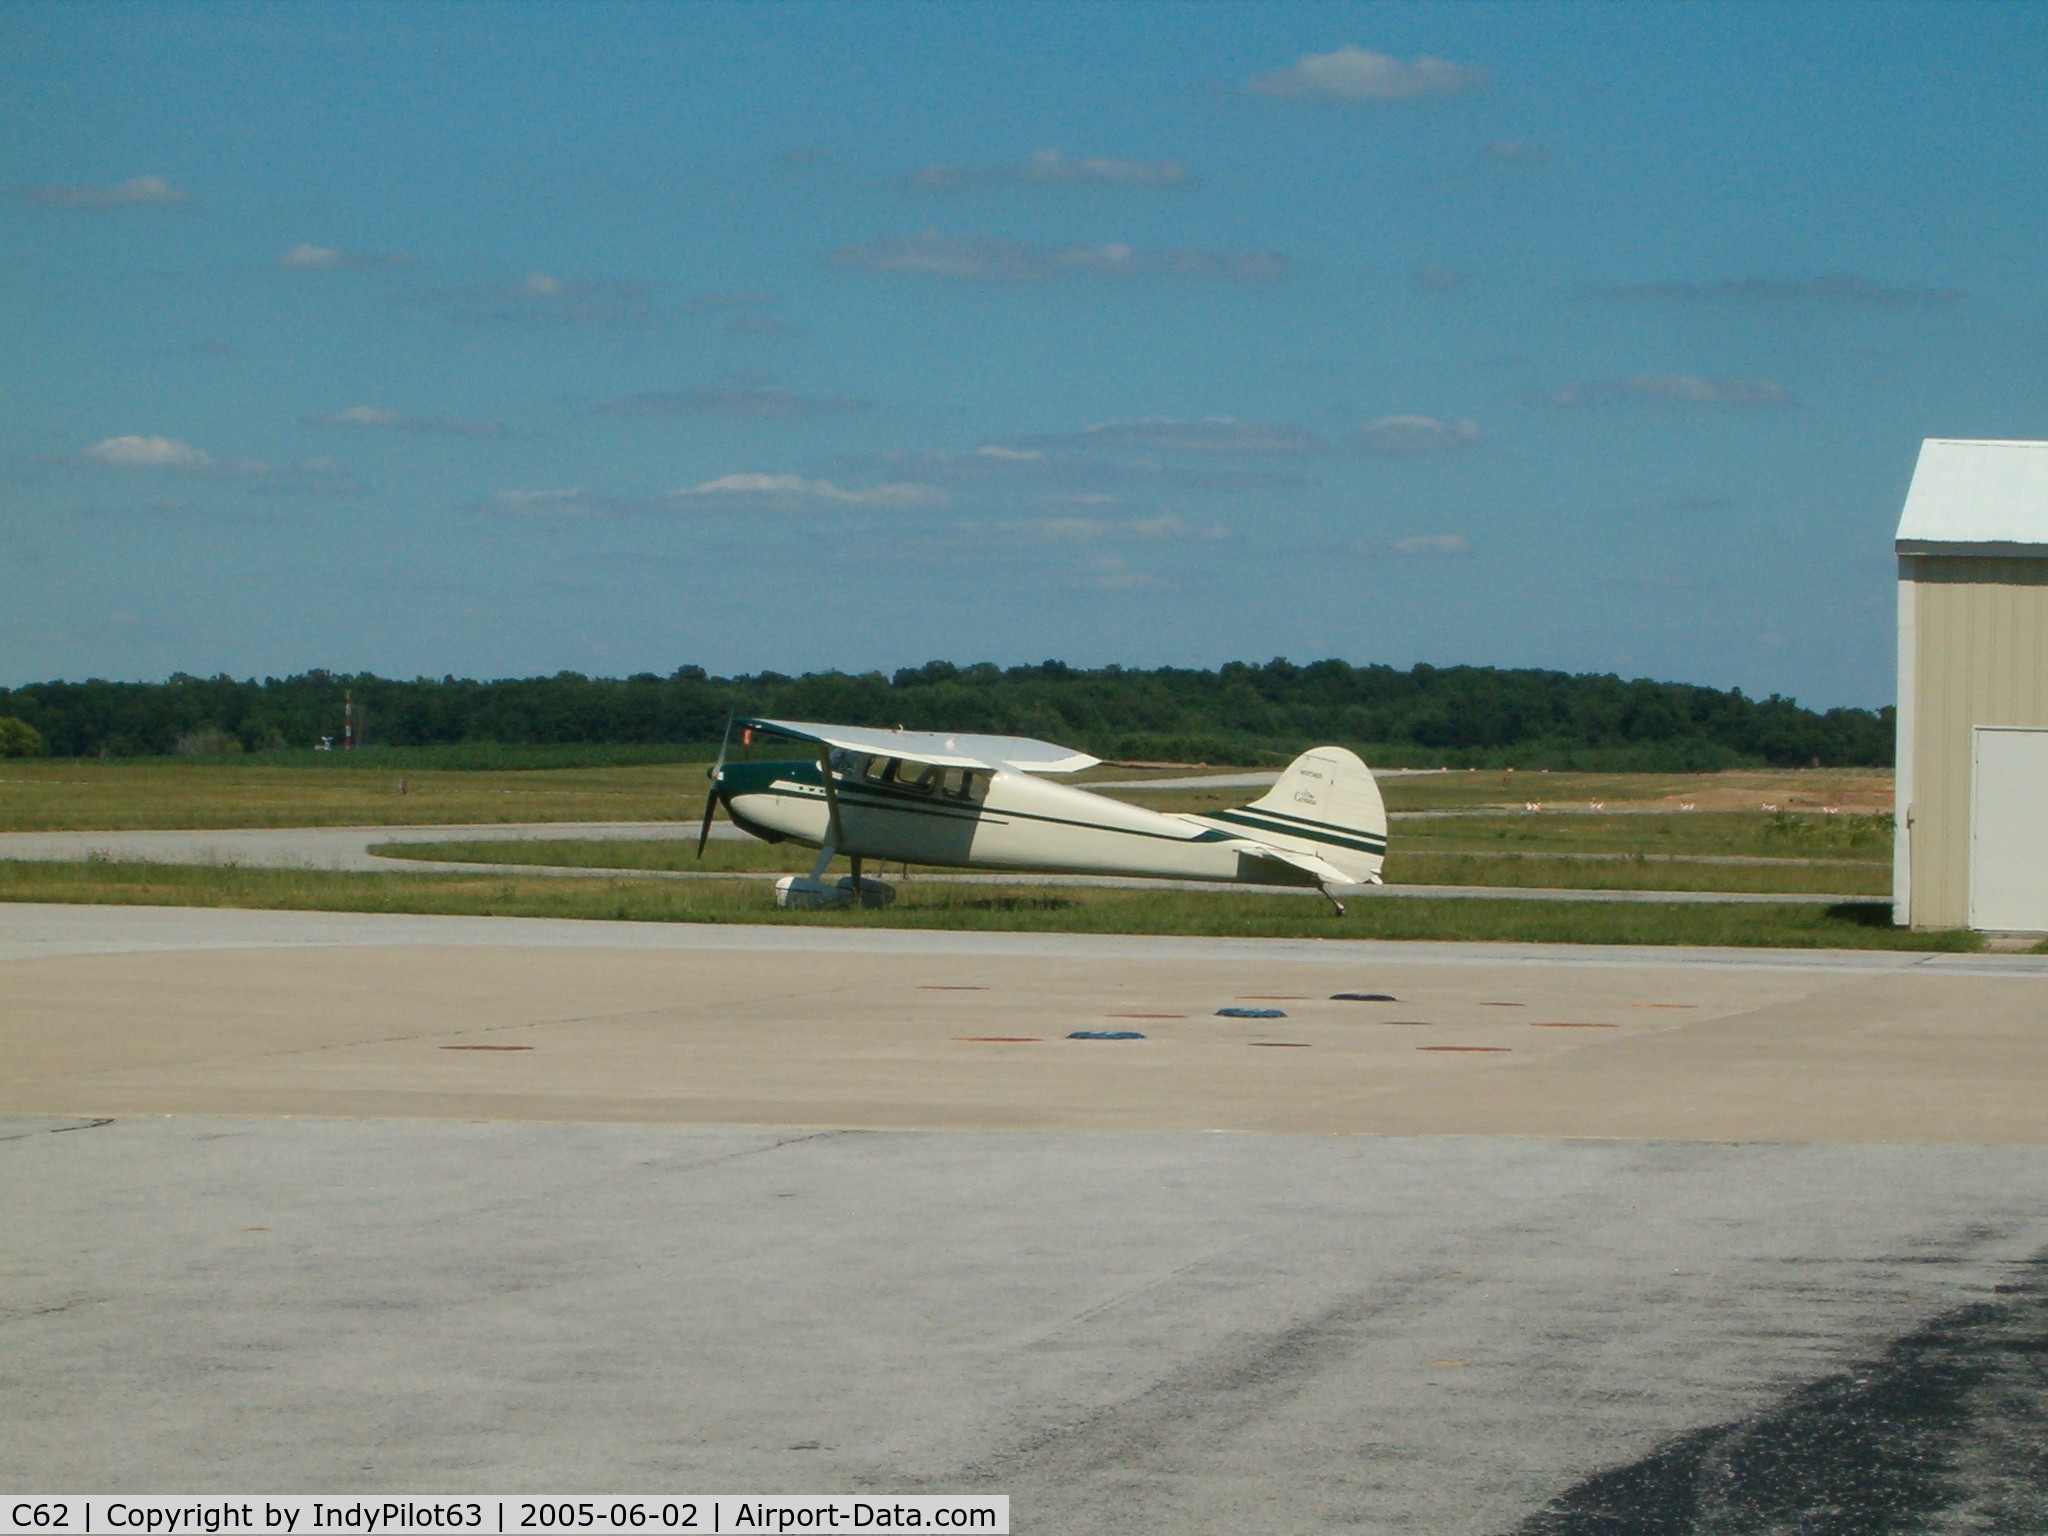 Kendallville Municipal Airport (C62) - Cessna on tarmac